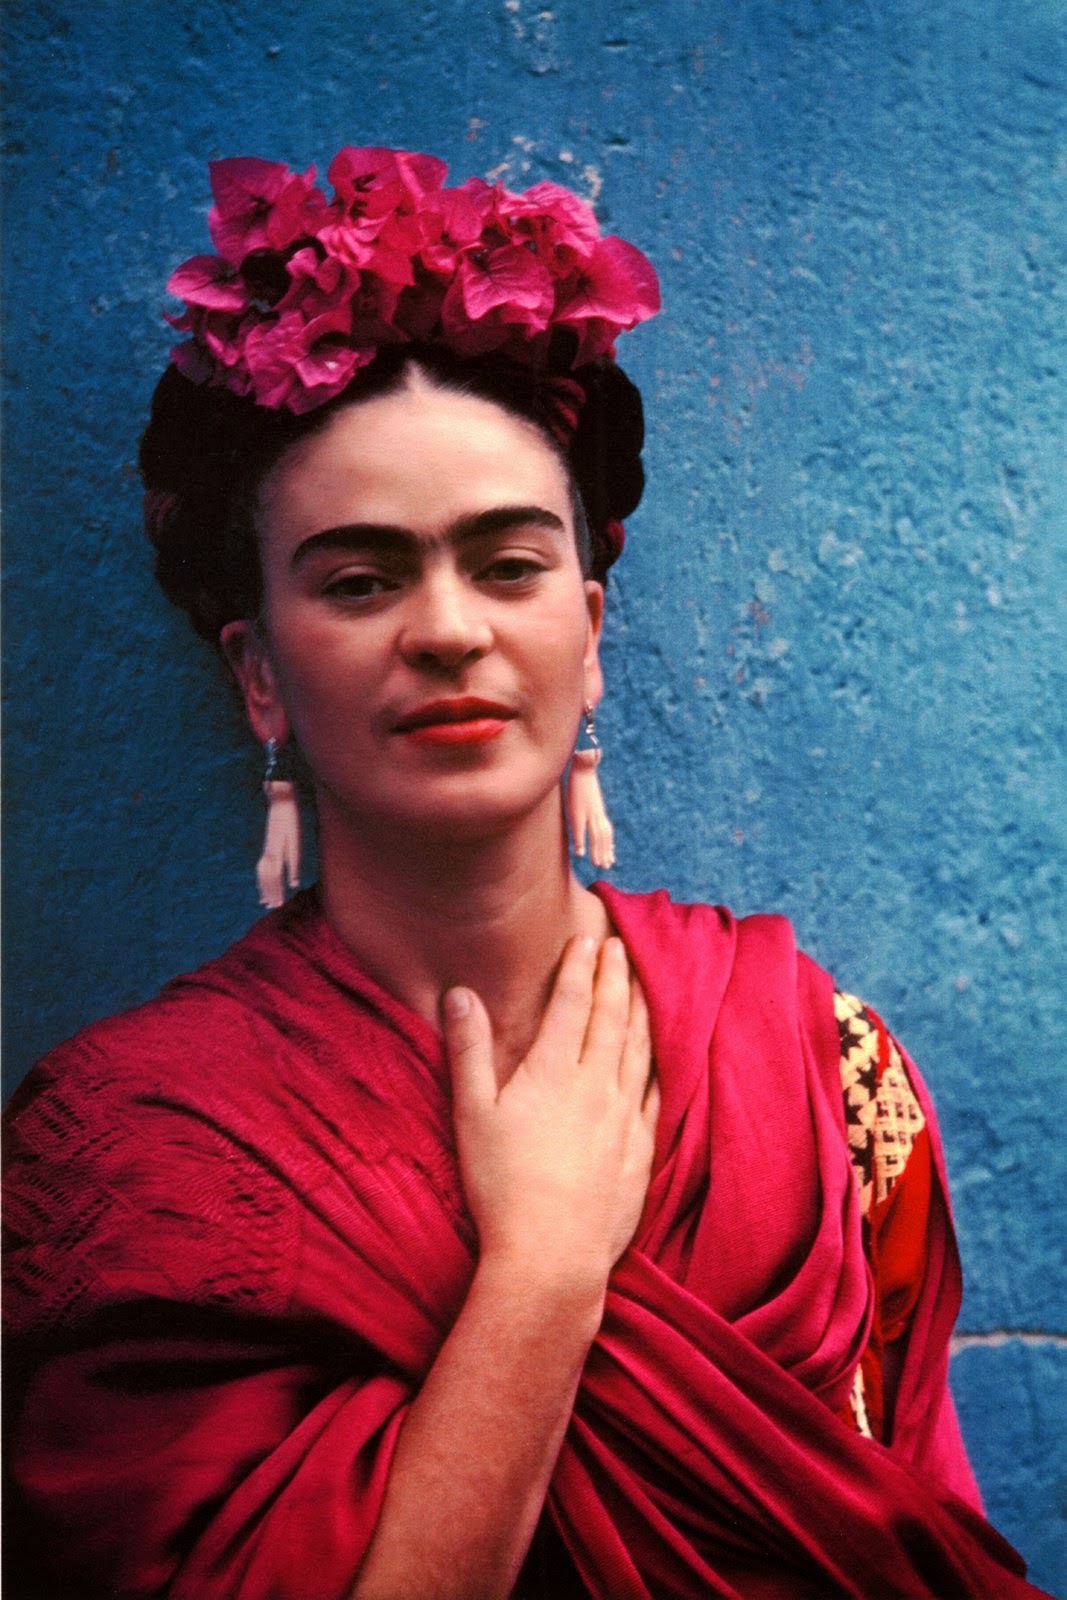 Frida Kalho